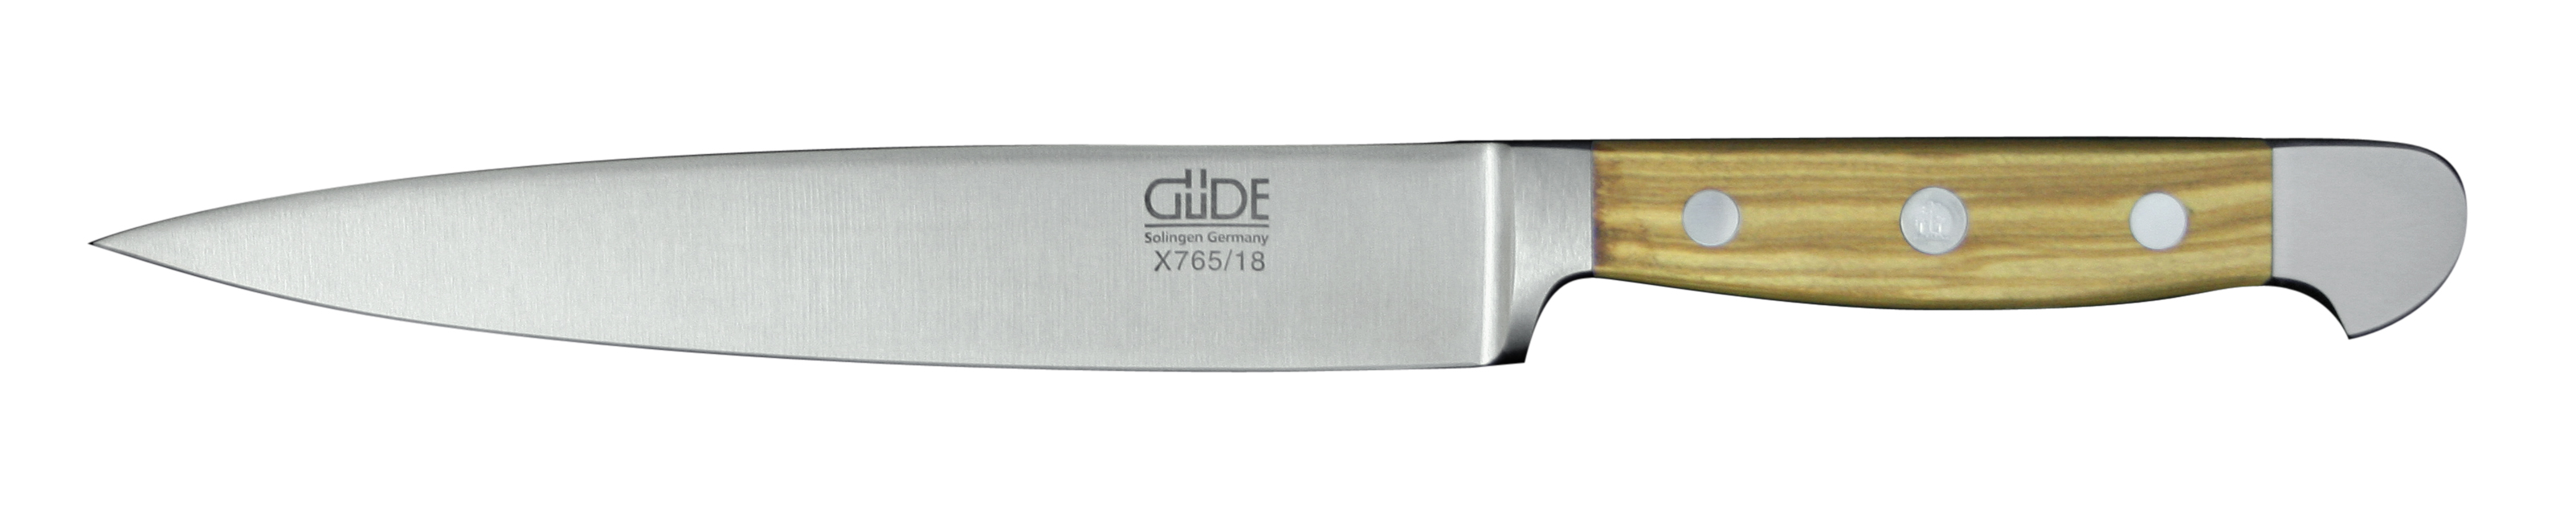 Güde Alpha Olive Filiermesser 18 cm / CVM-Messerstahl mit Griffschalen aus Olivenholz